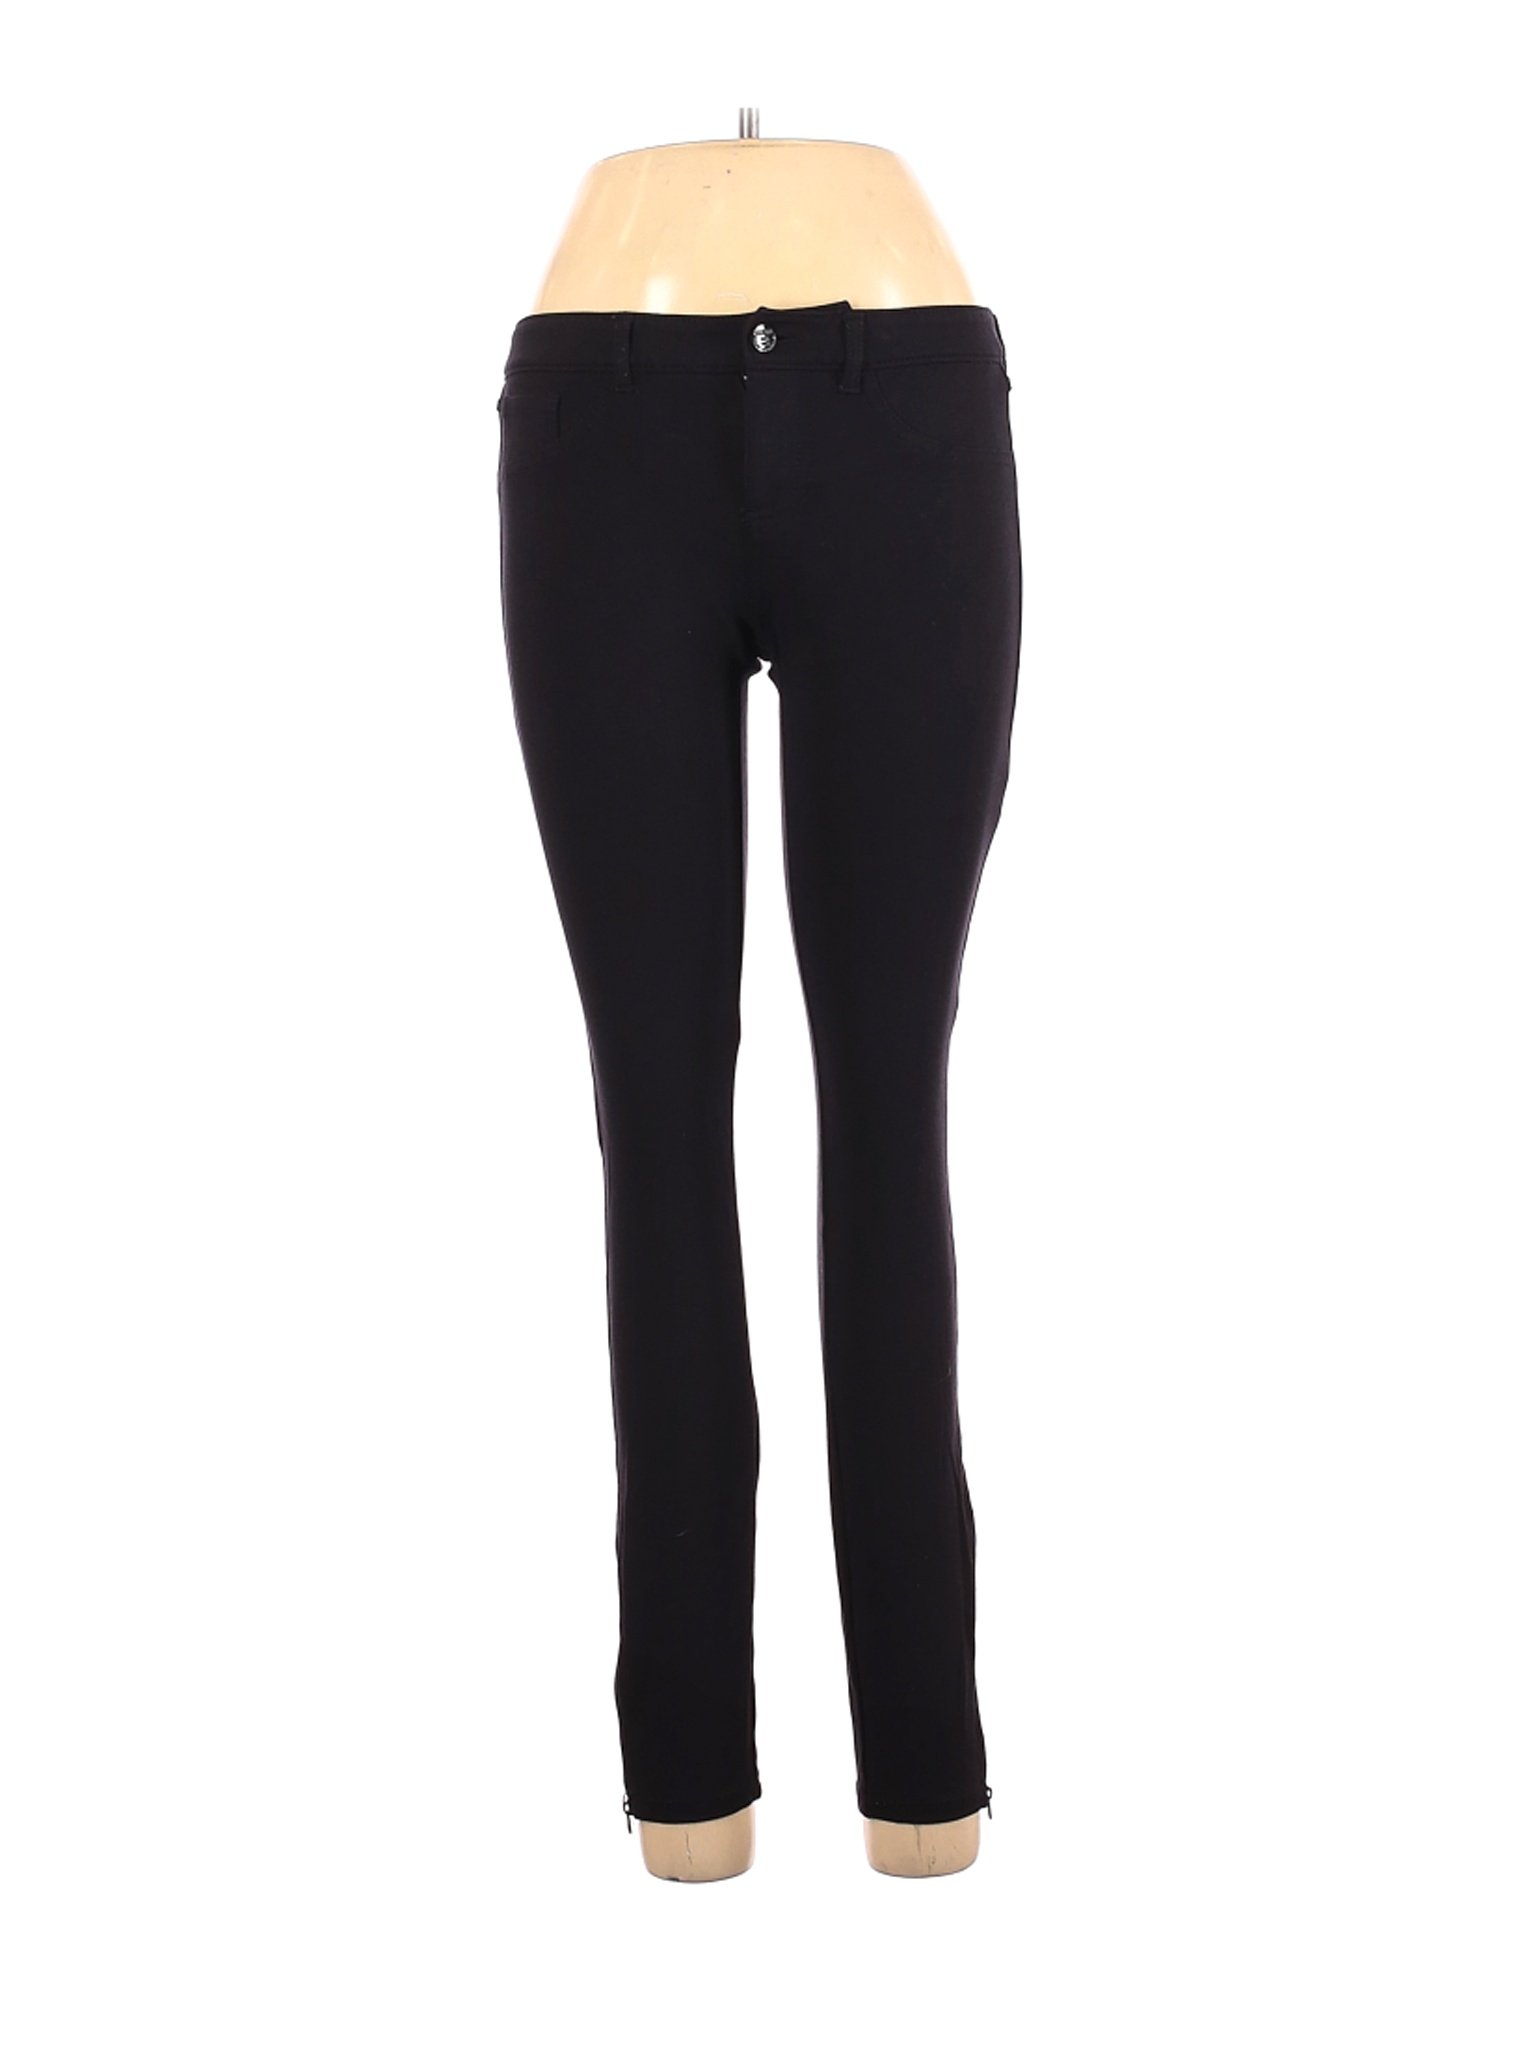 Guess Women Black Casual Pants 28W | eBay